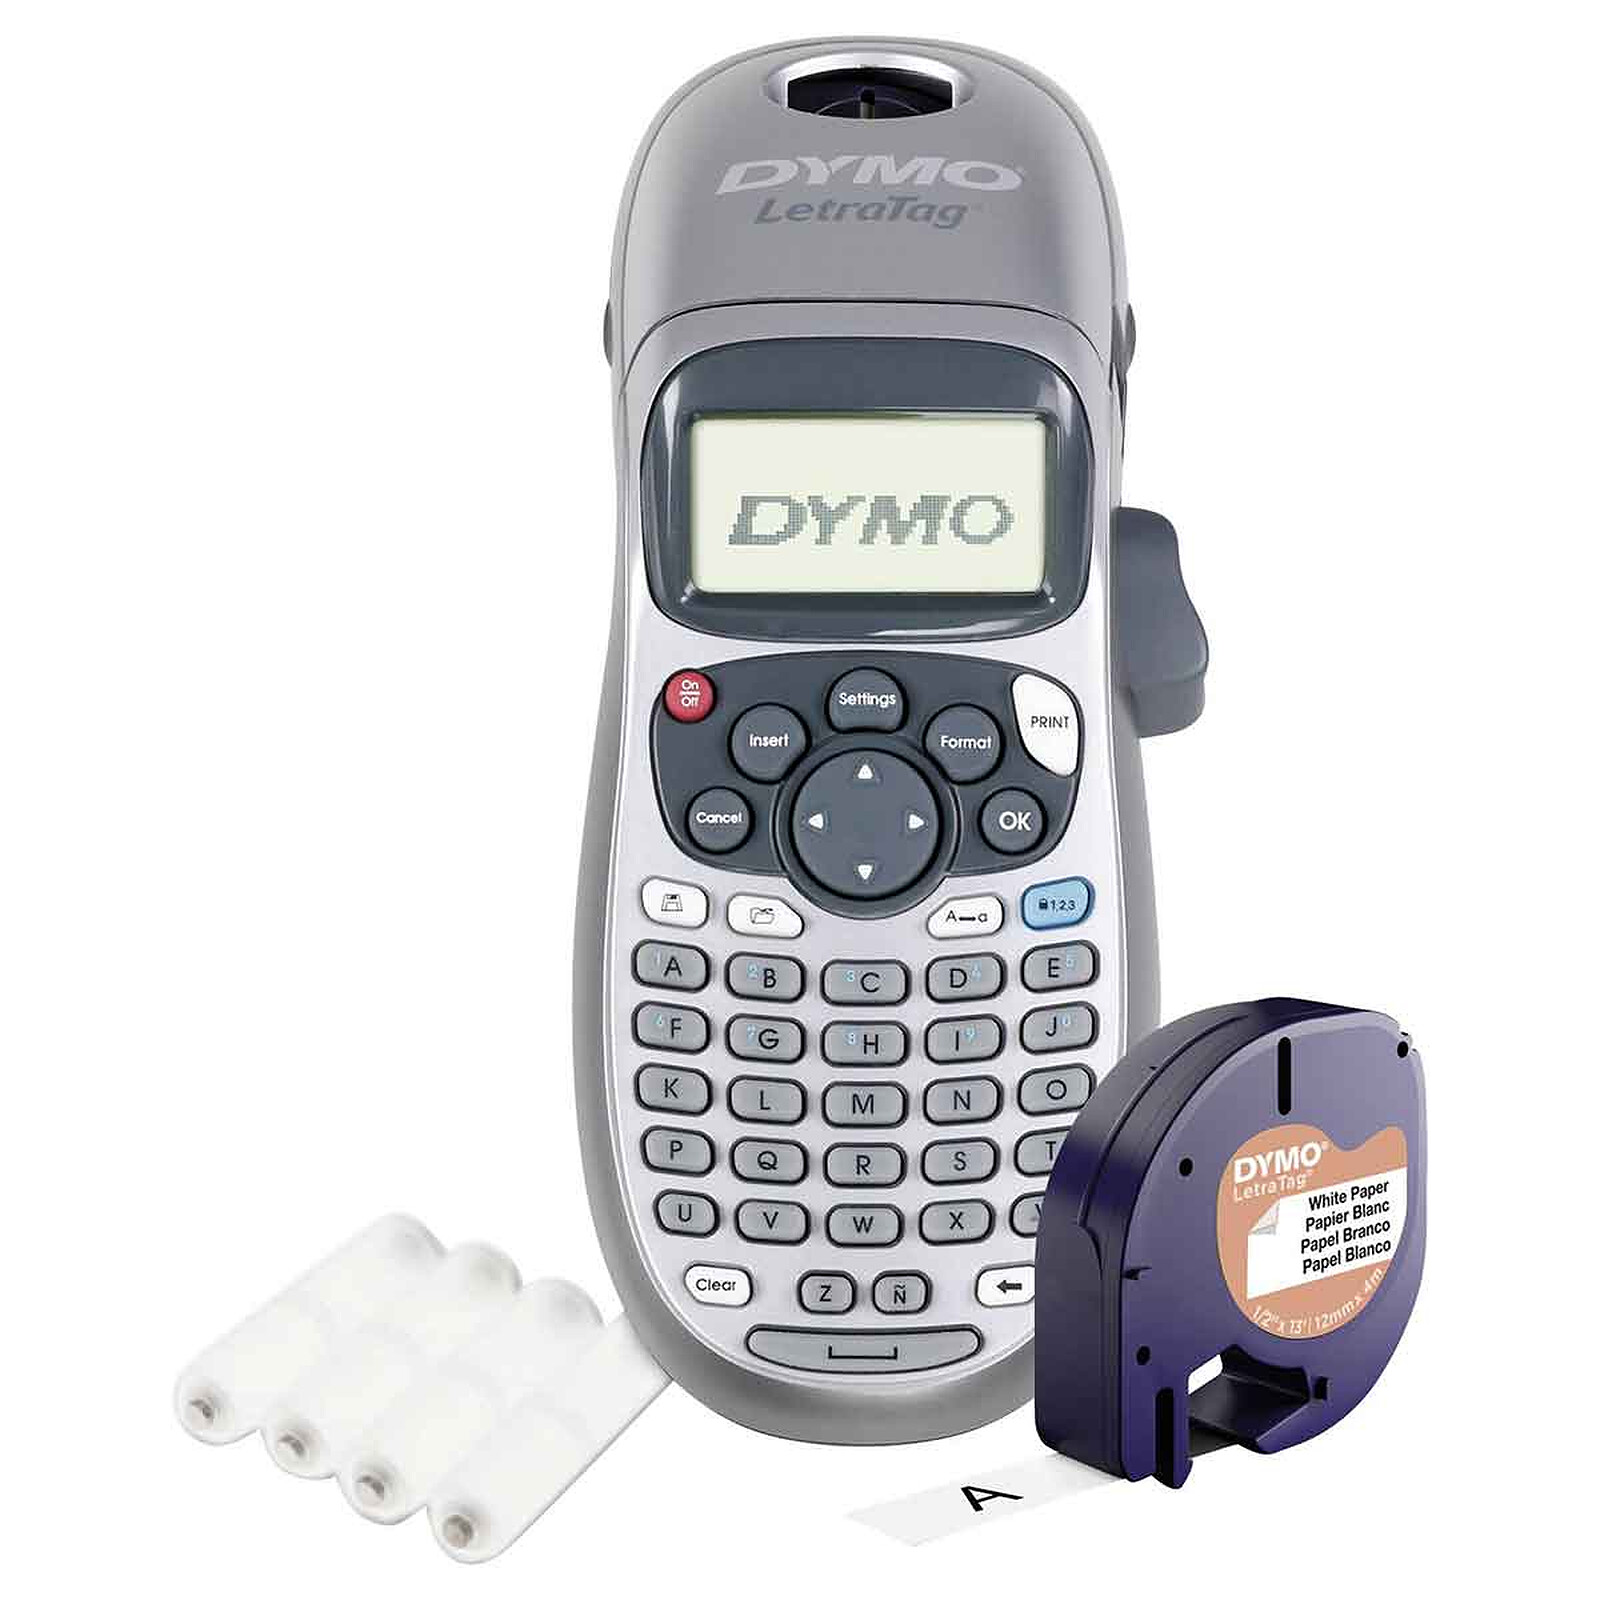 DYMO LetraTag LT-100H - Silver - Label maker DYMO on LDLC | Holy Moley